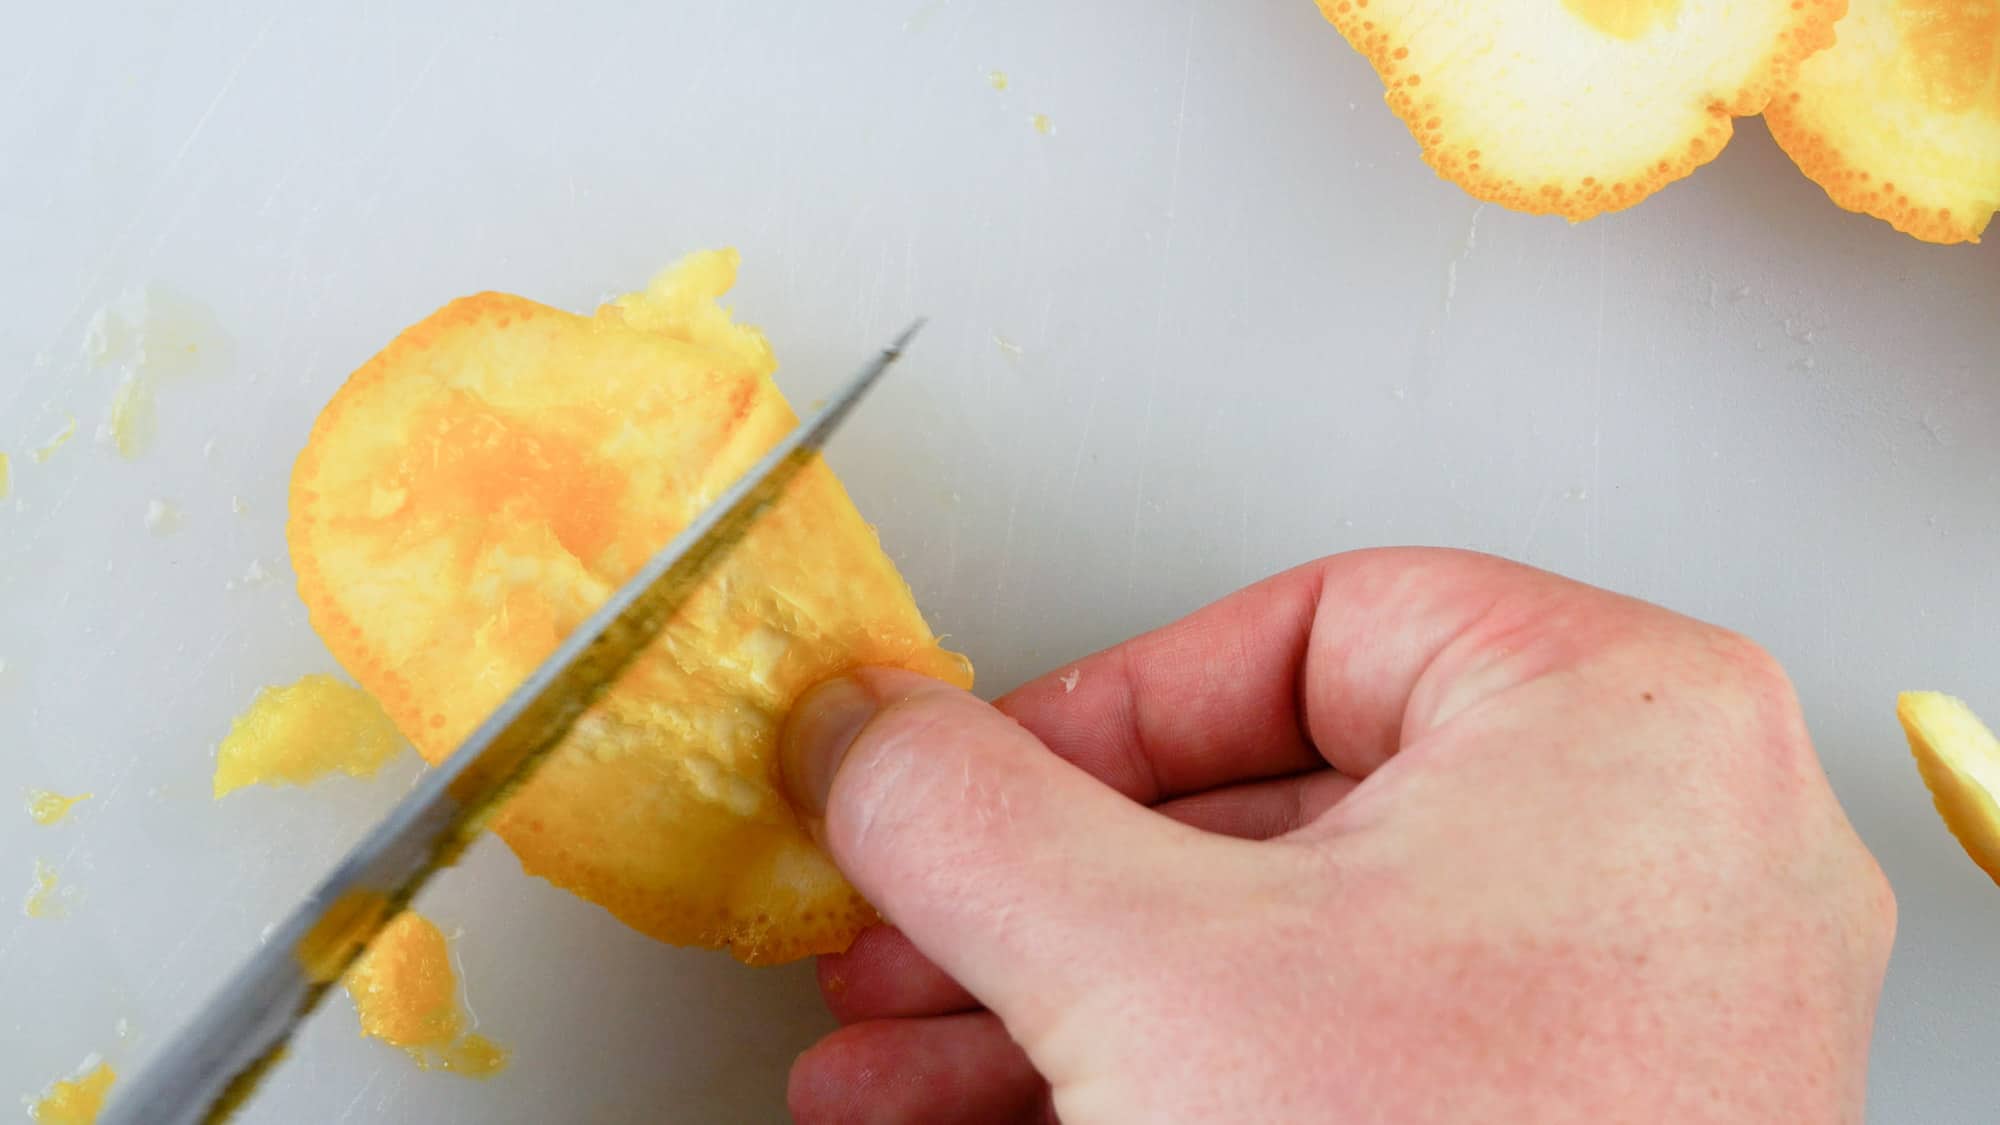 scraping orange peel clean